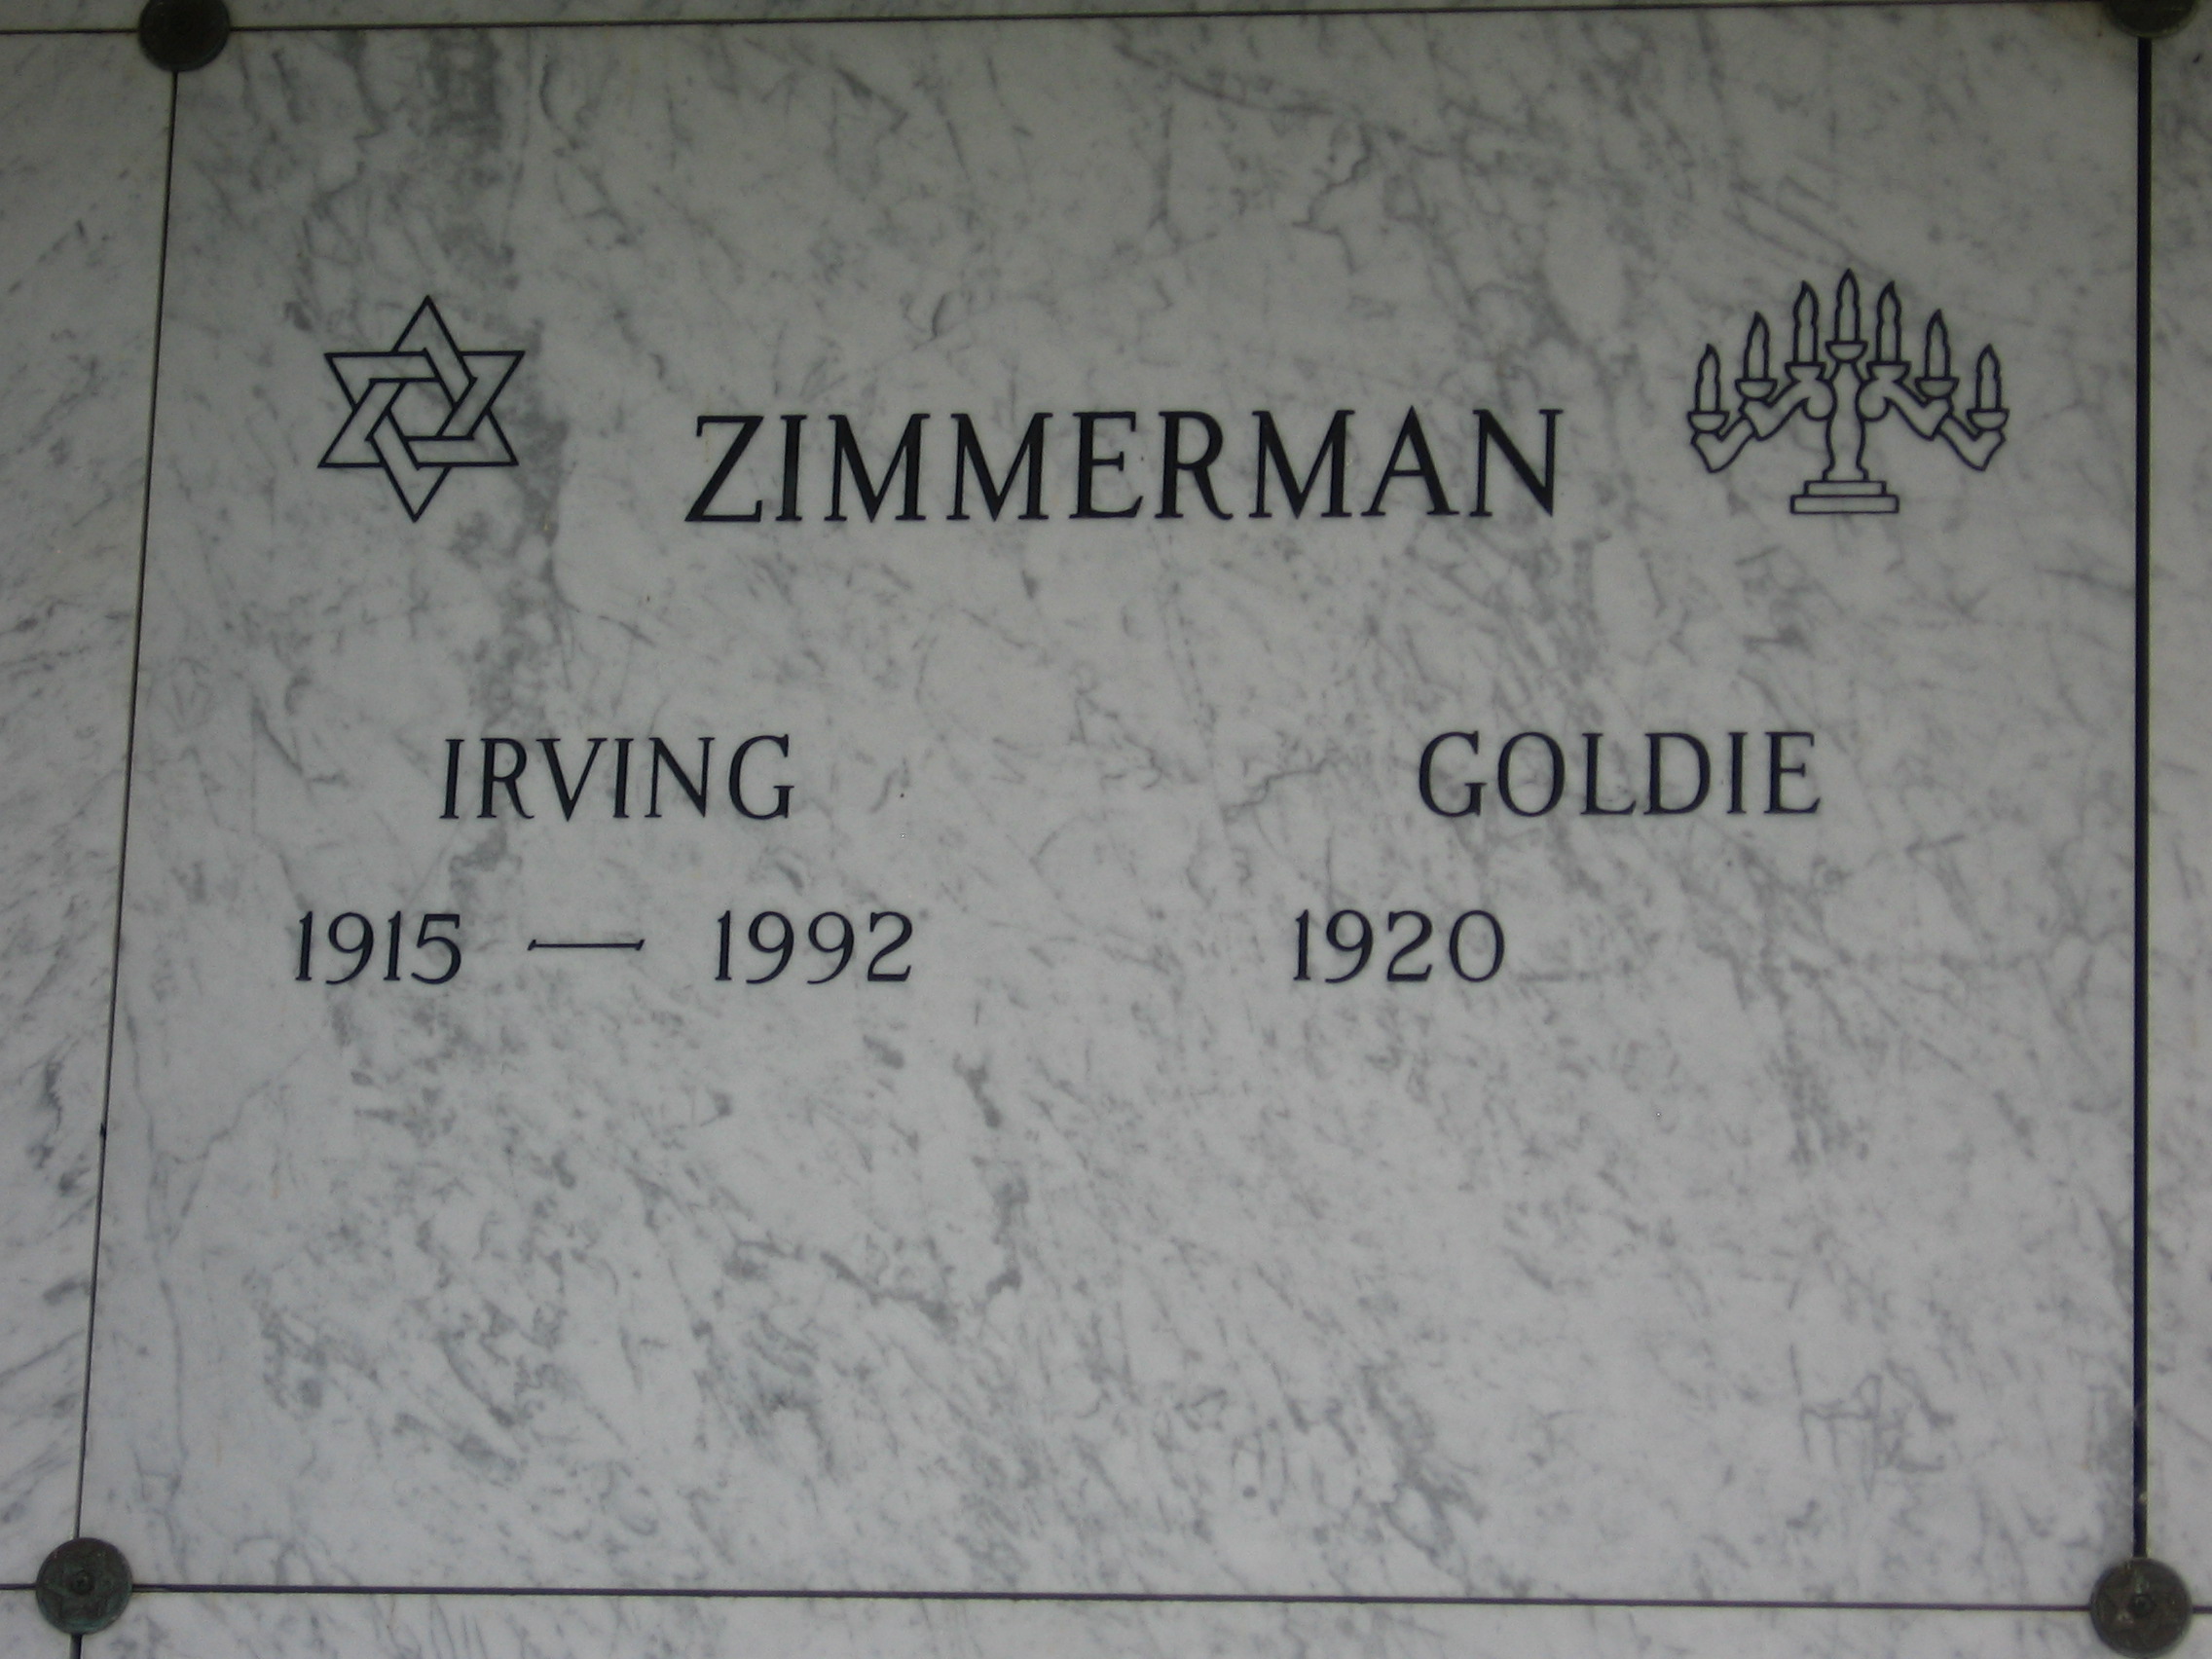 Irving Zimmerman